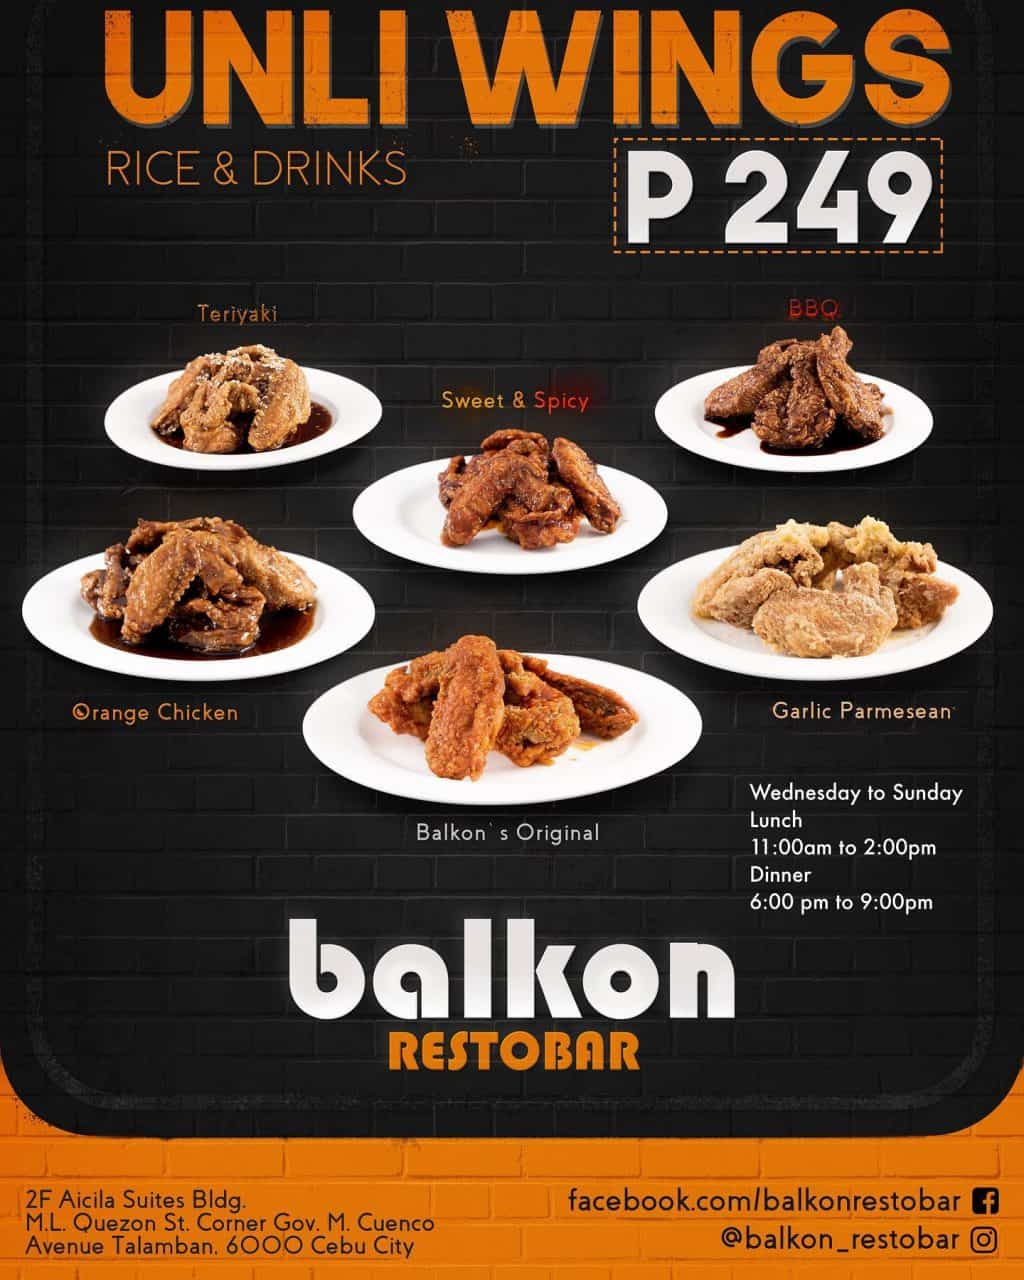 UNLI Wings, Rice & Drinks for ₱249 at Balkon Restobar in Talamban